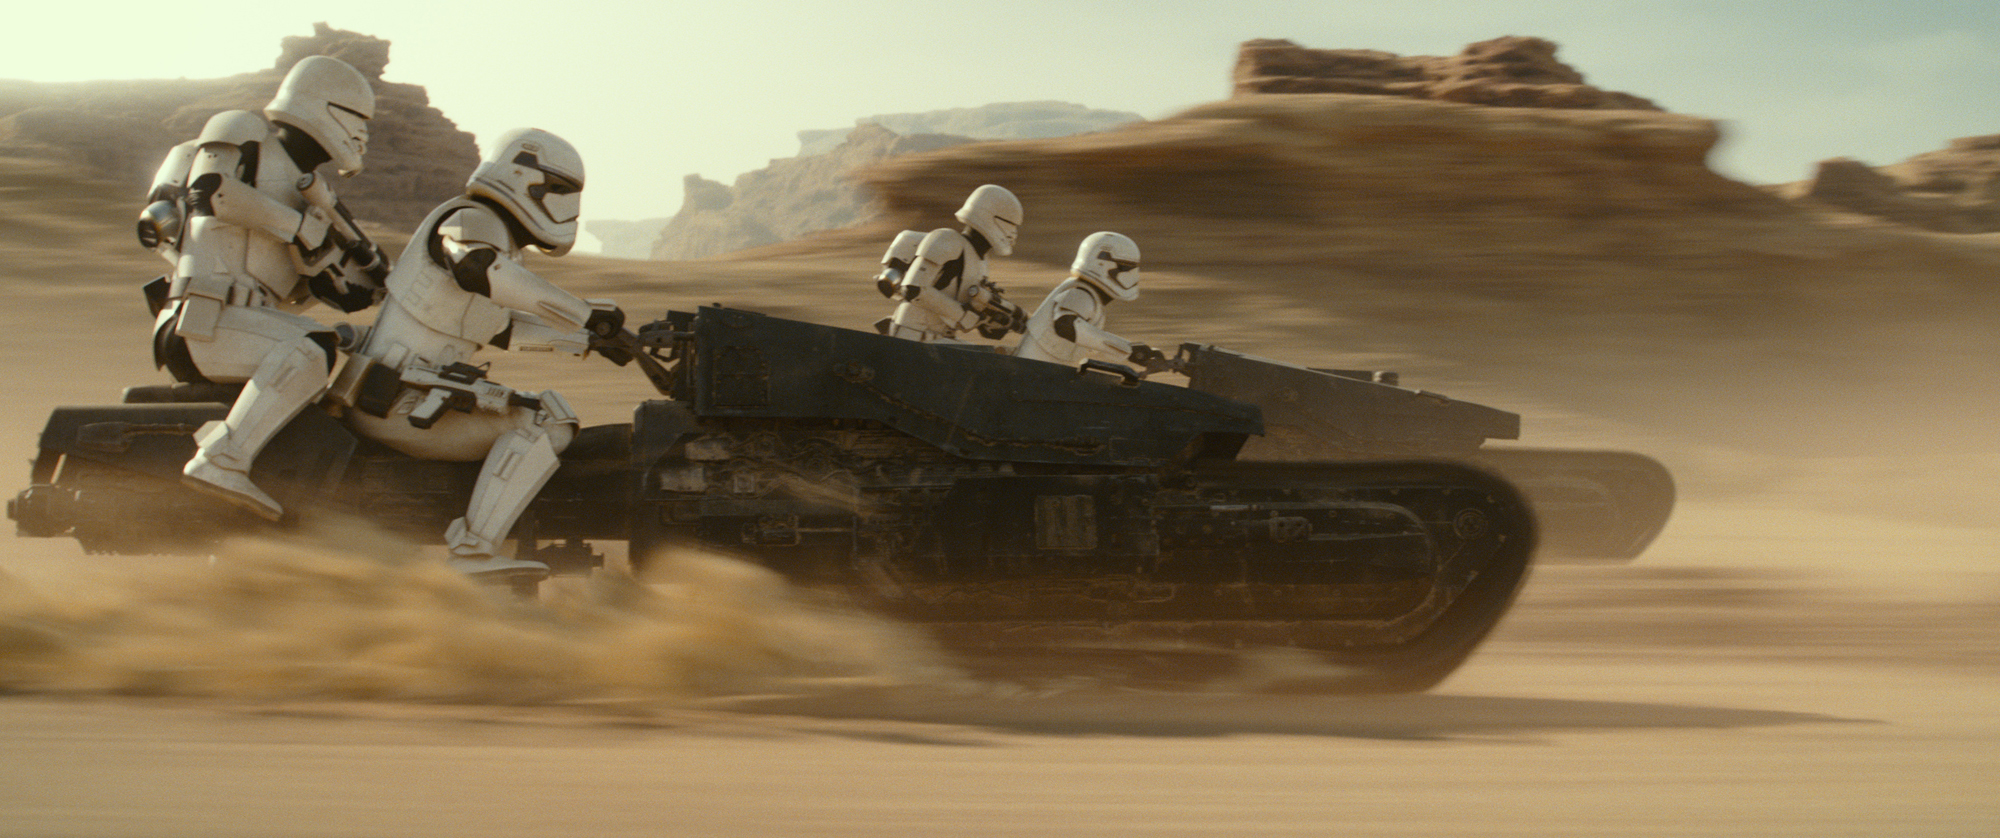 Stormtroopers in STAR WARS:  THE RISE OF SKYWALKER